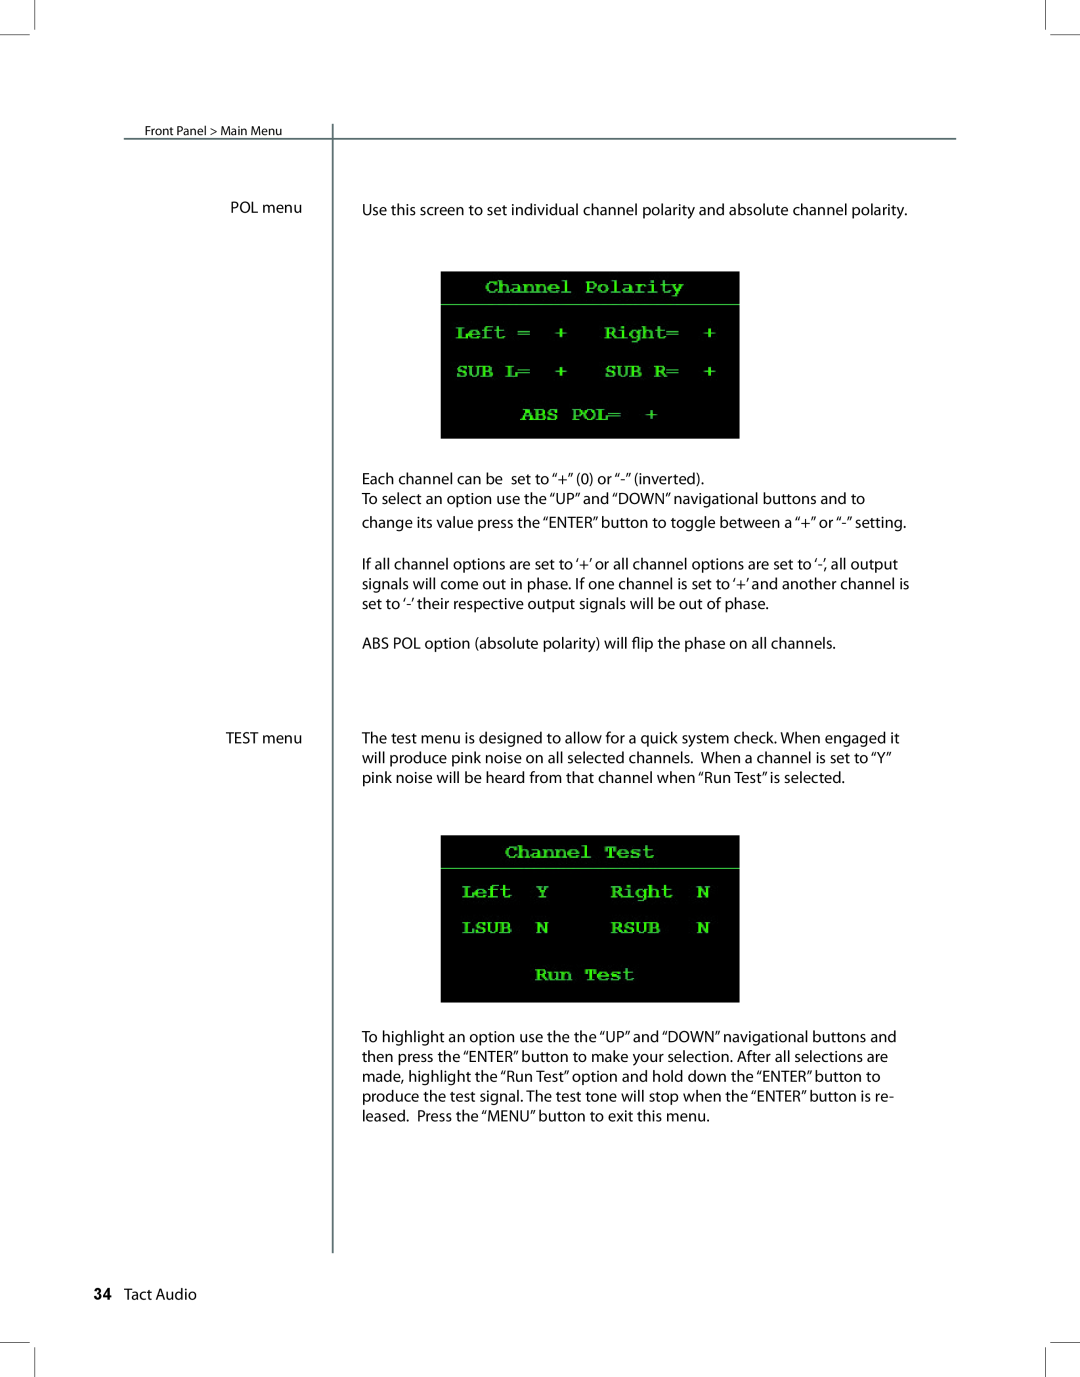 TacT Audio RCS 2.2 XP owner manual POL menu 